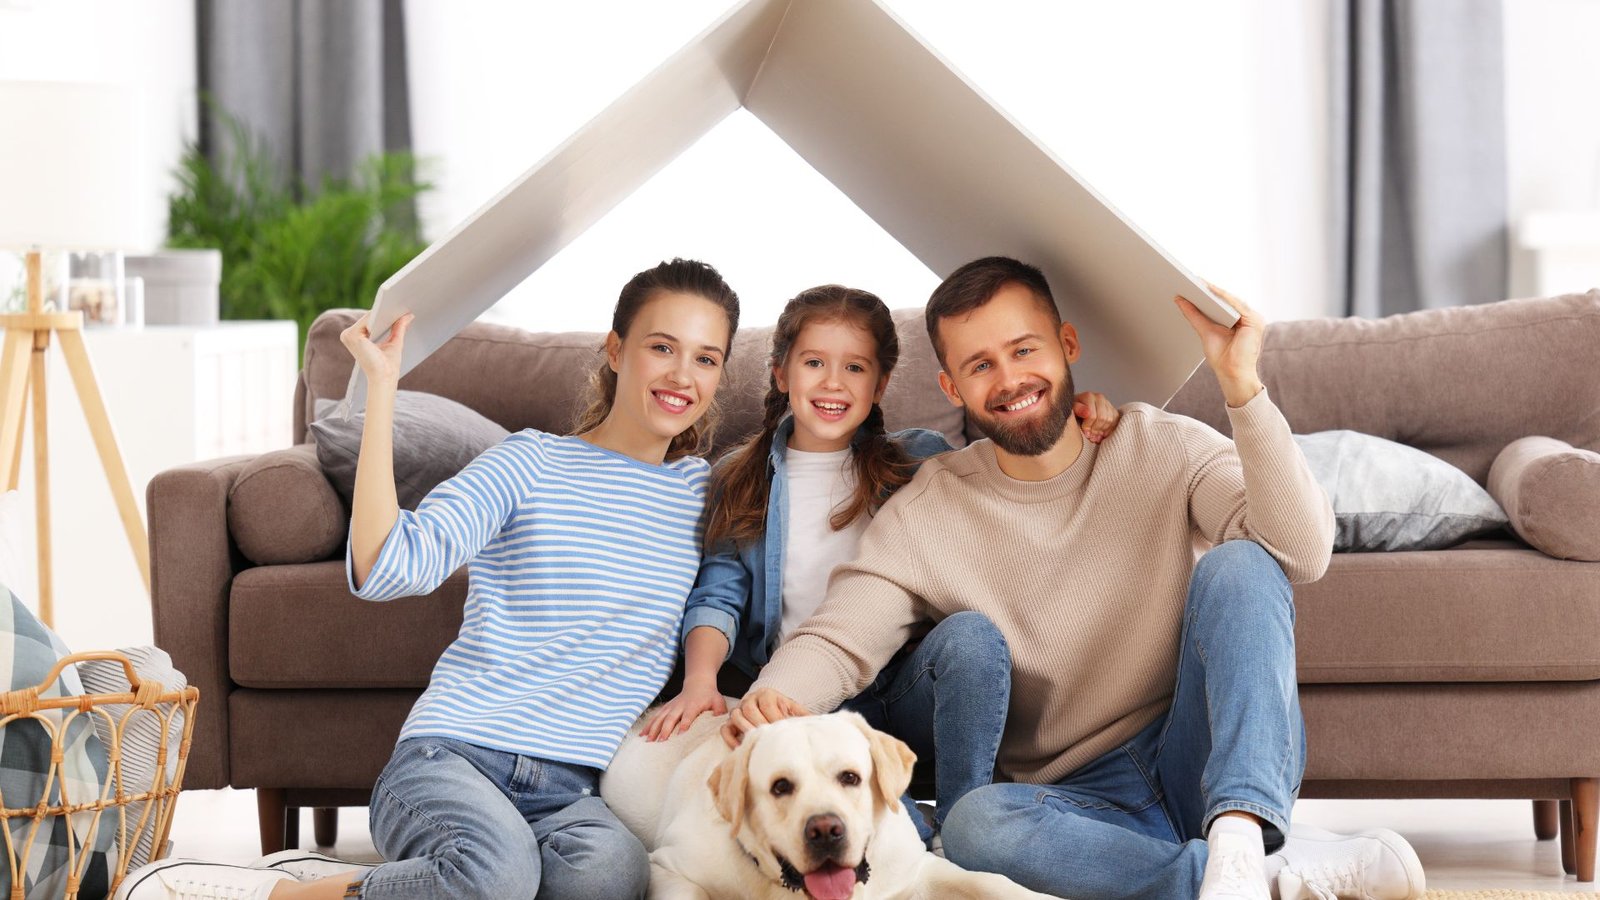 Familia soñando con su casa propia en Florida, USA con LUZ ANGELA AGREDO - Agente Inmobiliaria en Florida